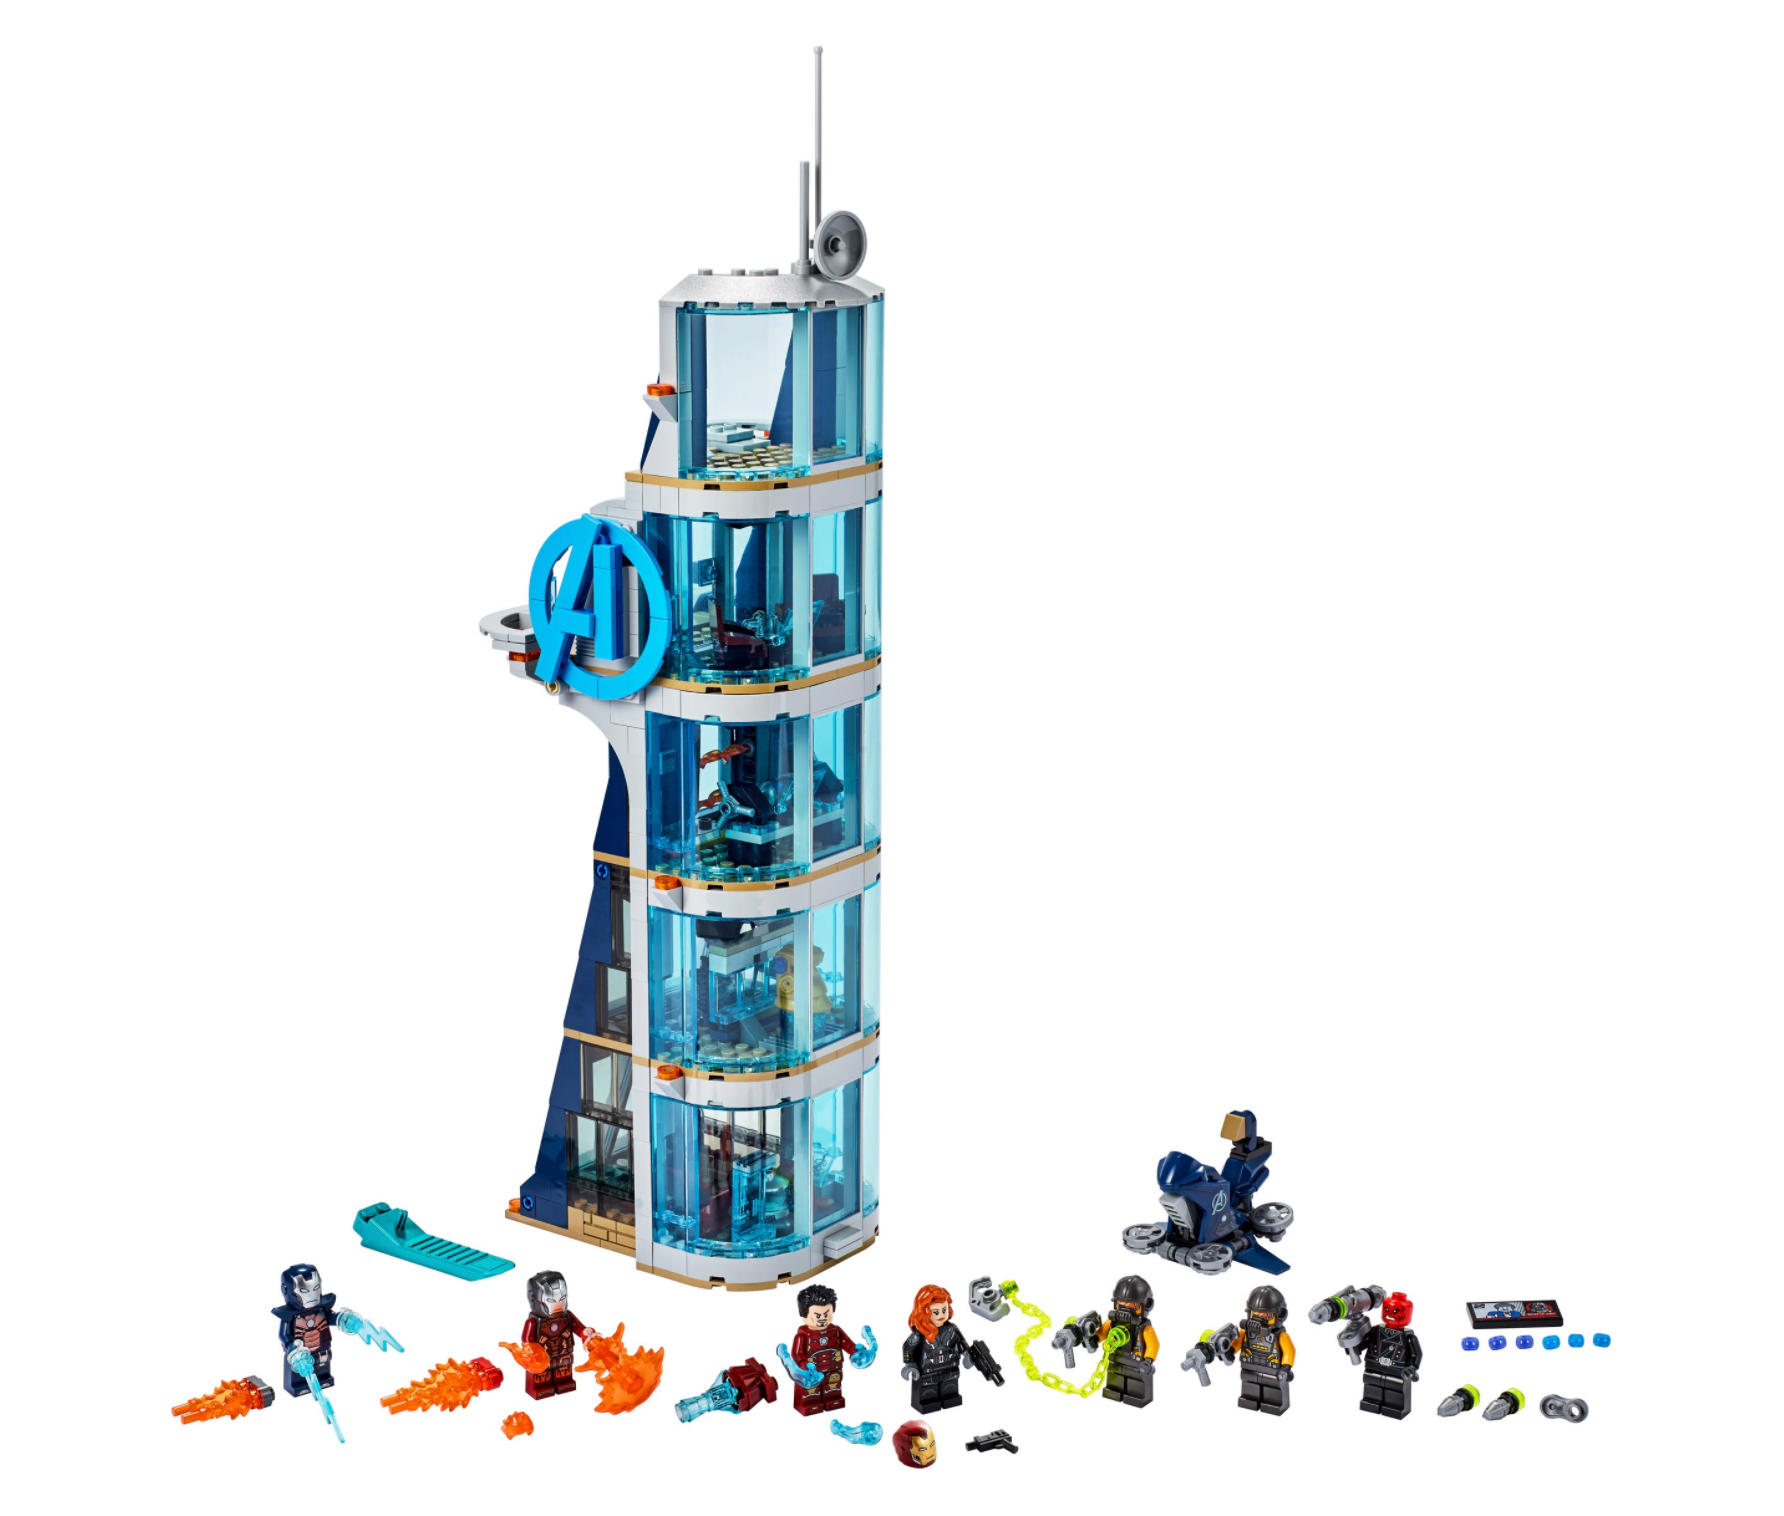 LEGO: Super Heroes - Avengers Tower Battle